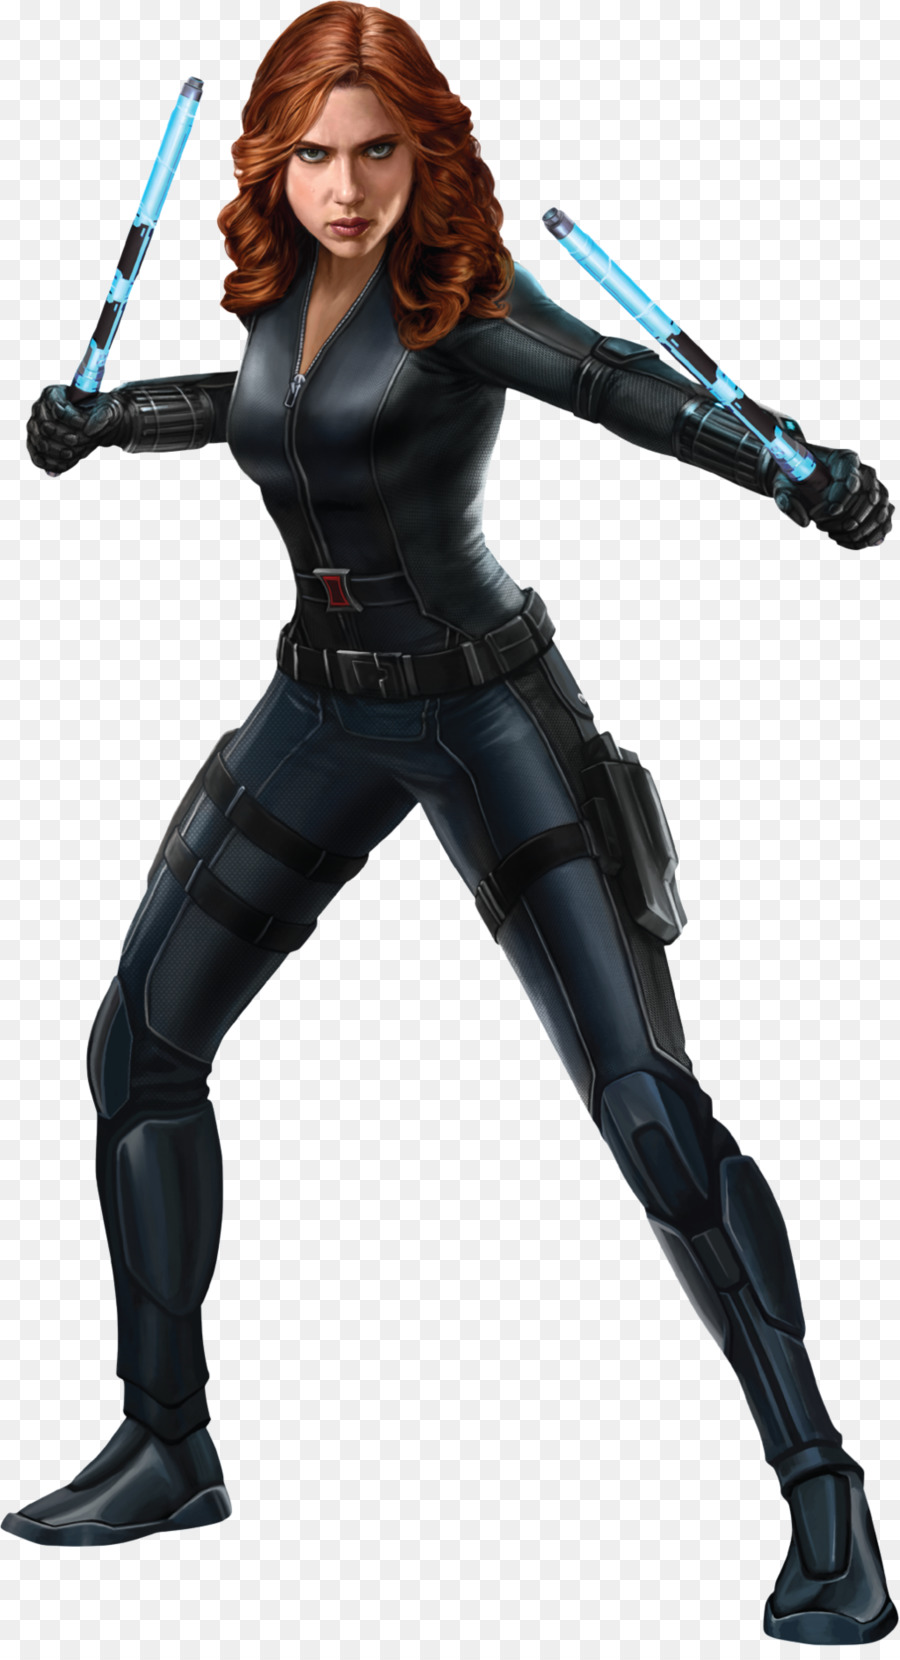 Scarlett Johansson Black Widow Iron Man Black Panther Captain America - Black Widow png download - 1024*1873 - Free Transparent Scarlett Johansson png Download.